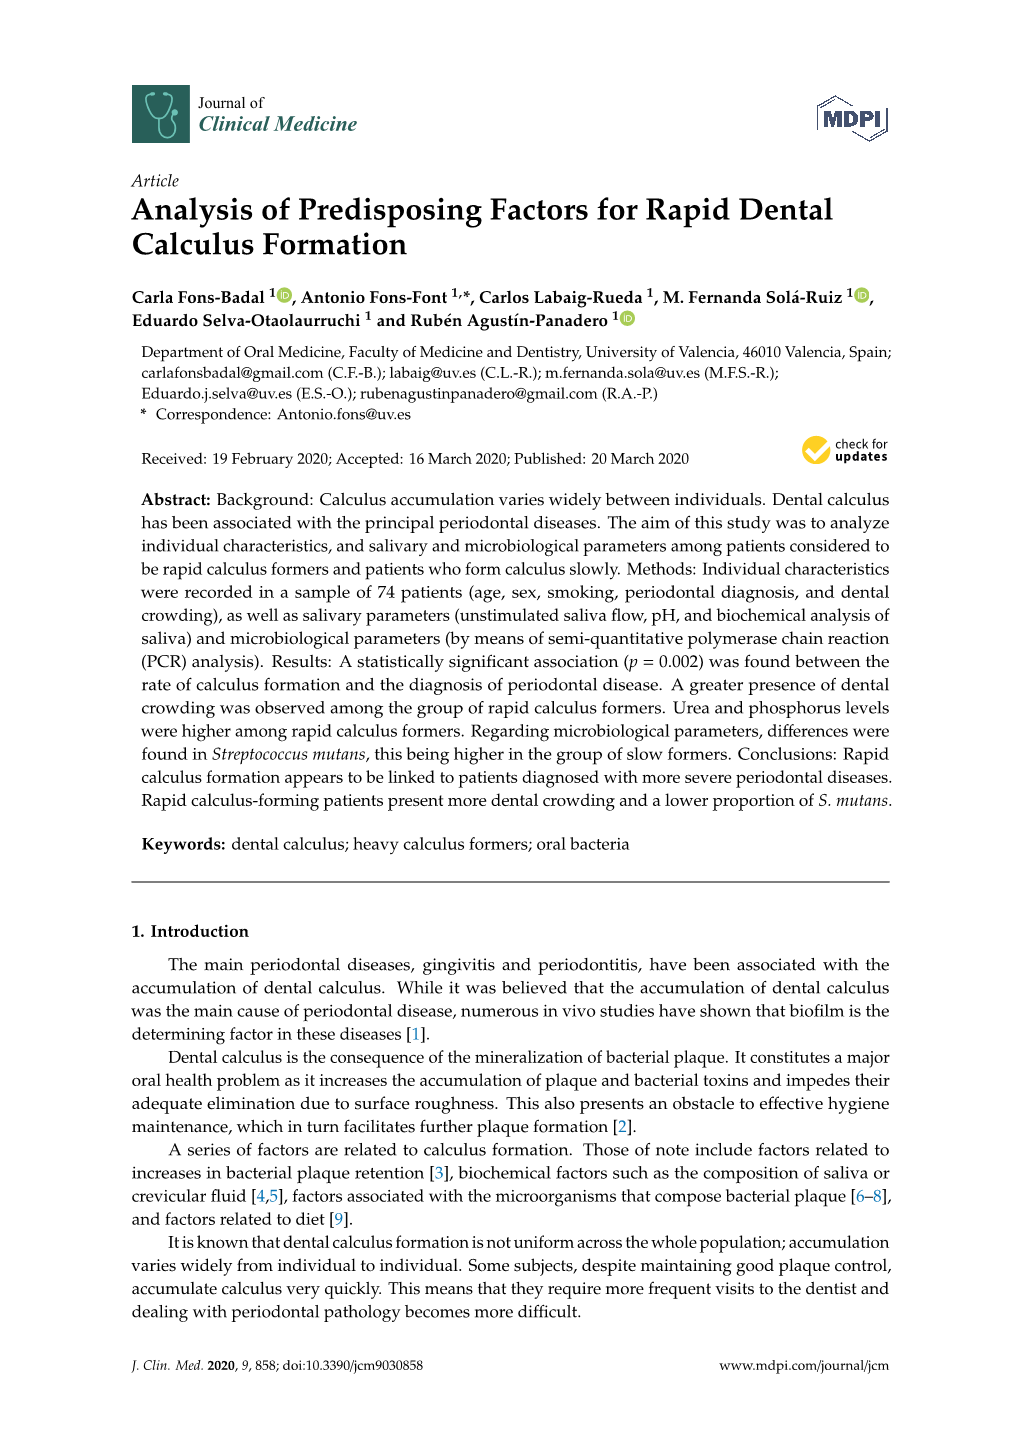 Analysis of Predisposing Factors for Rapid Dental Calculus Formation